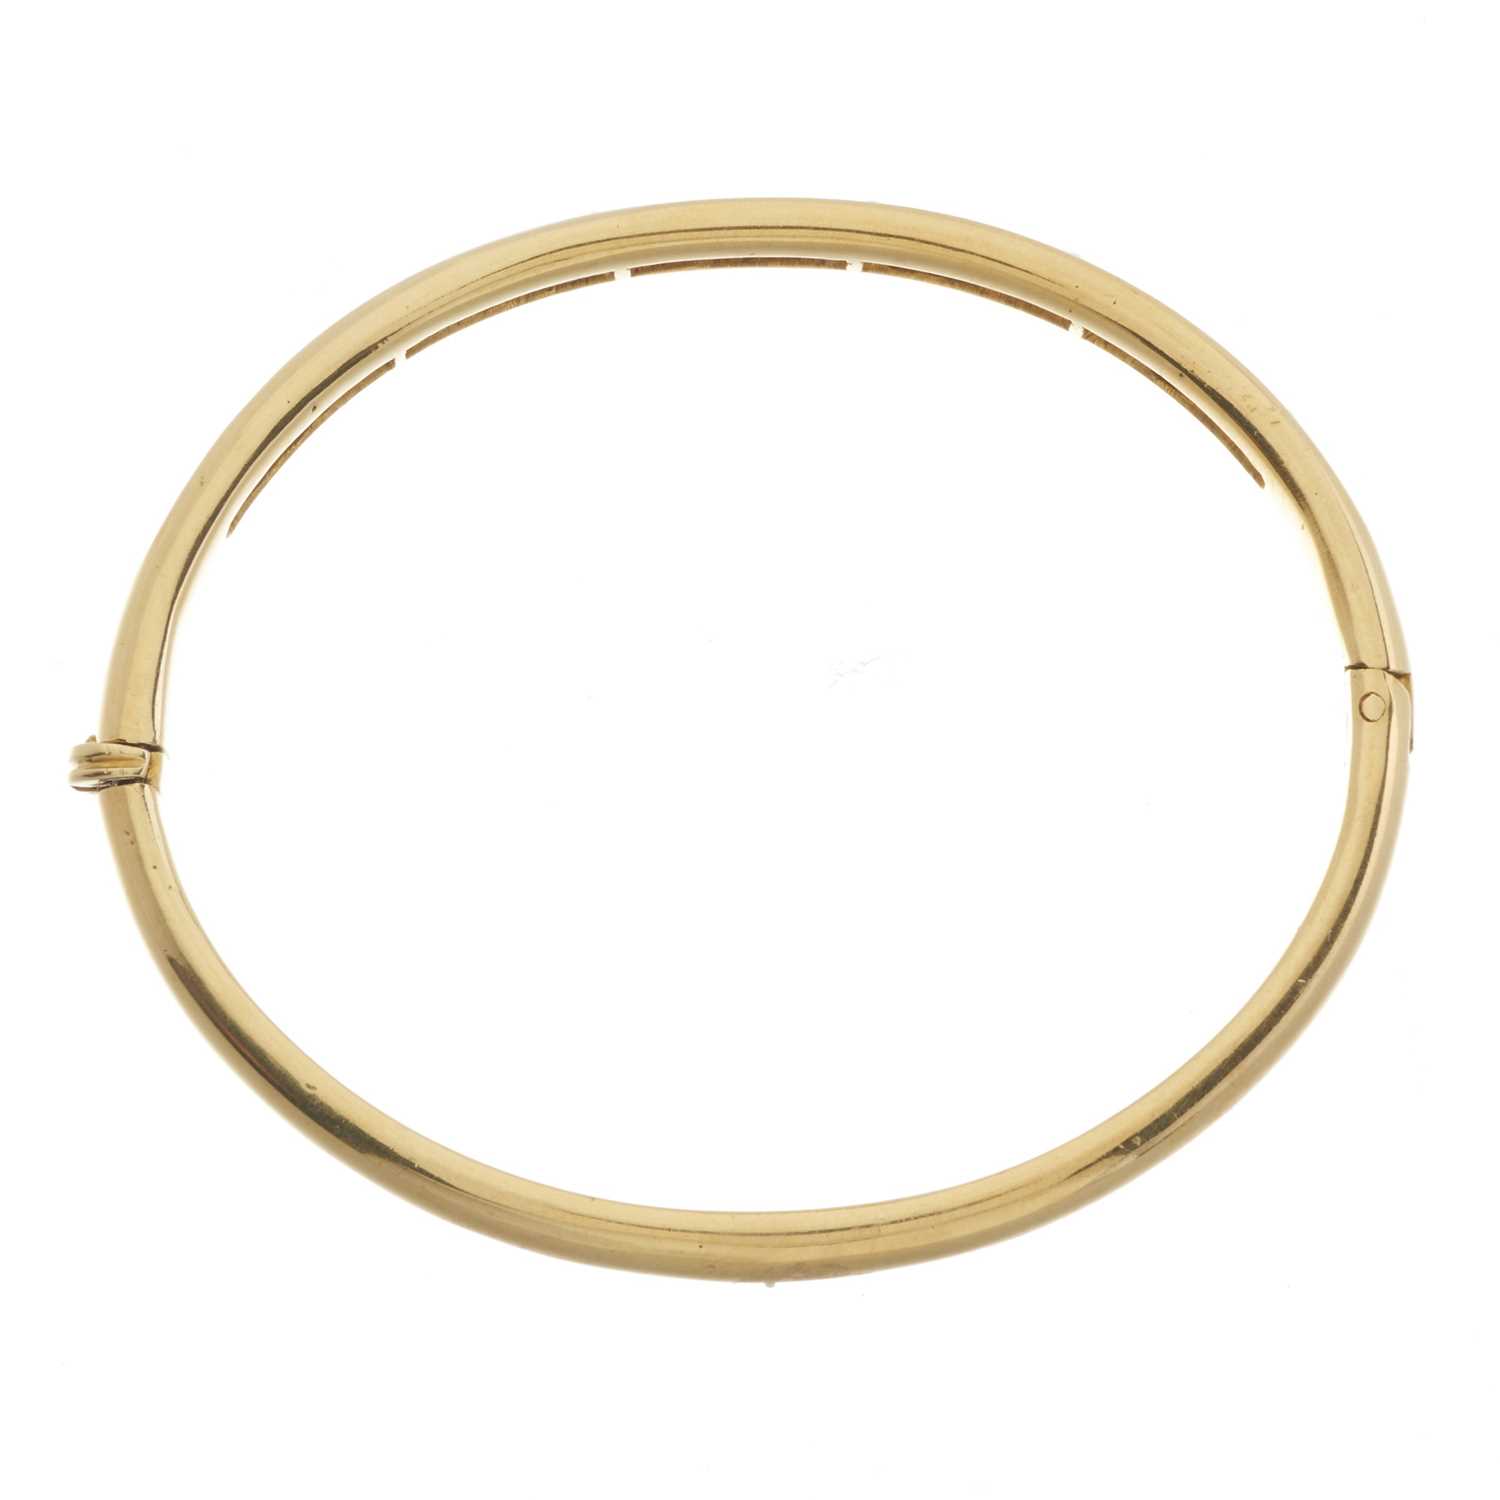 An 18ct gold diamond line bangle bracelet - Image 2 of 2